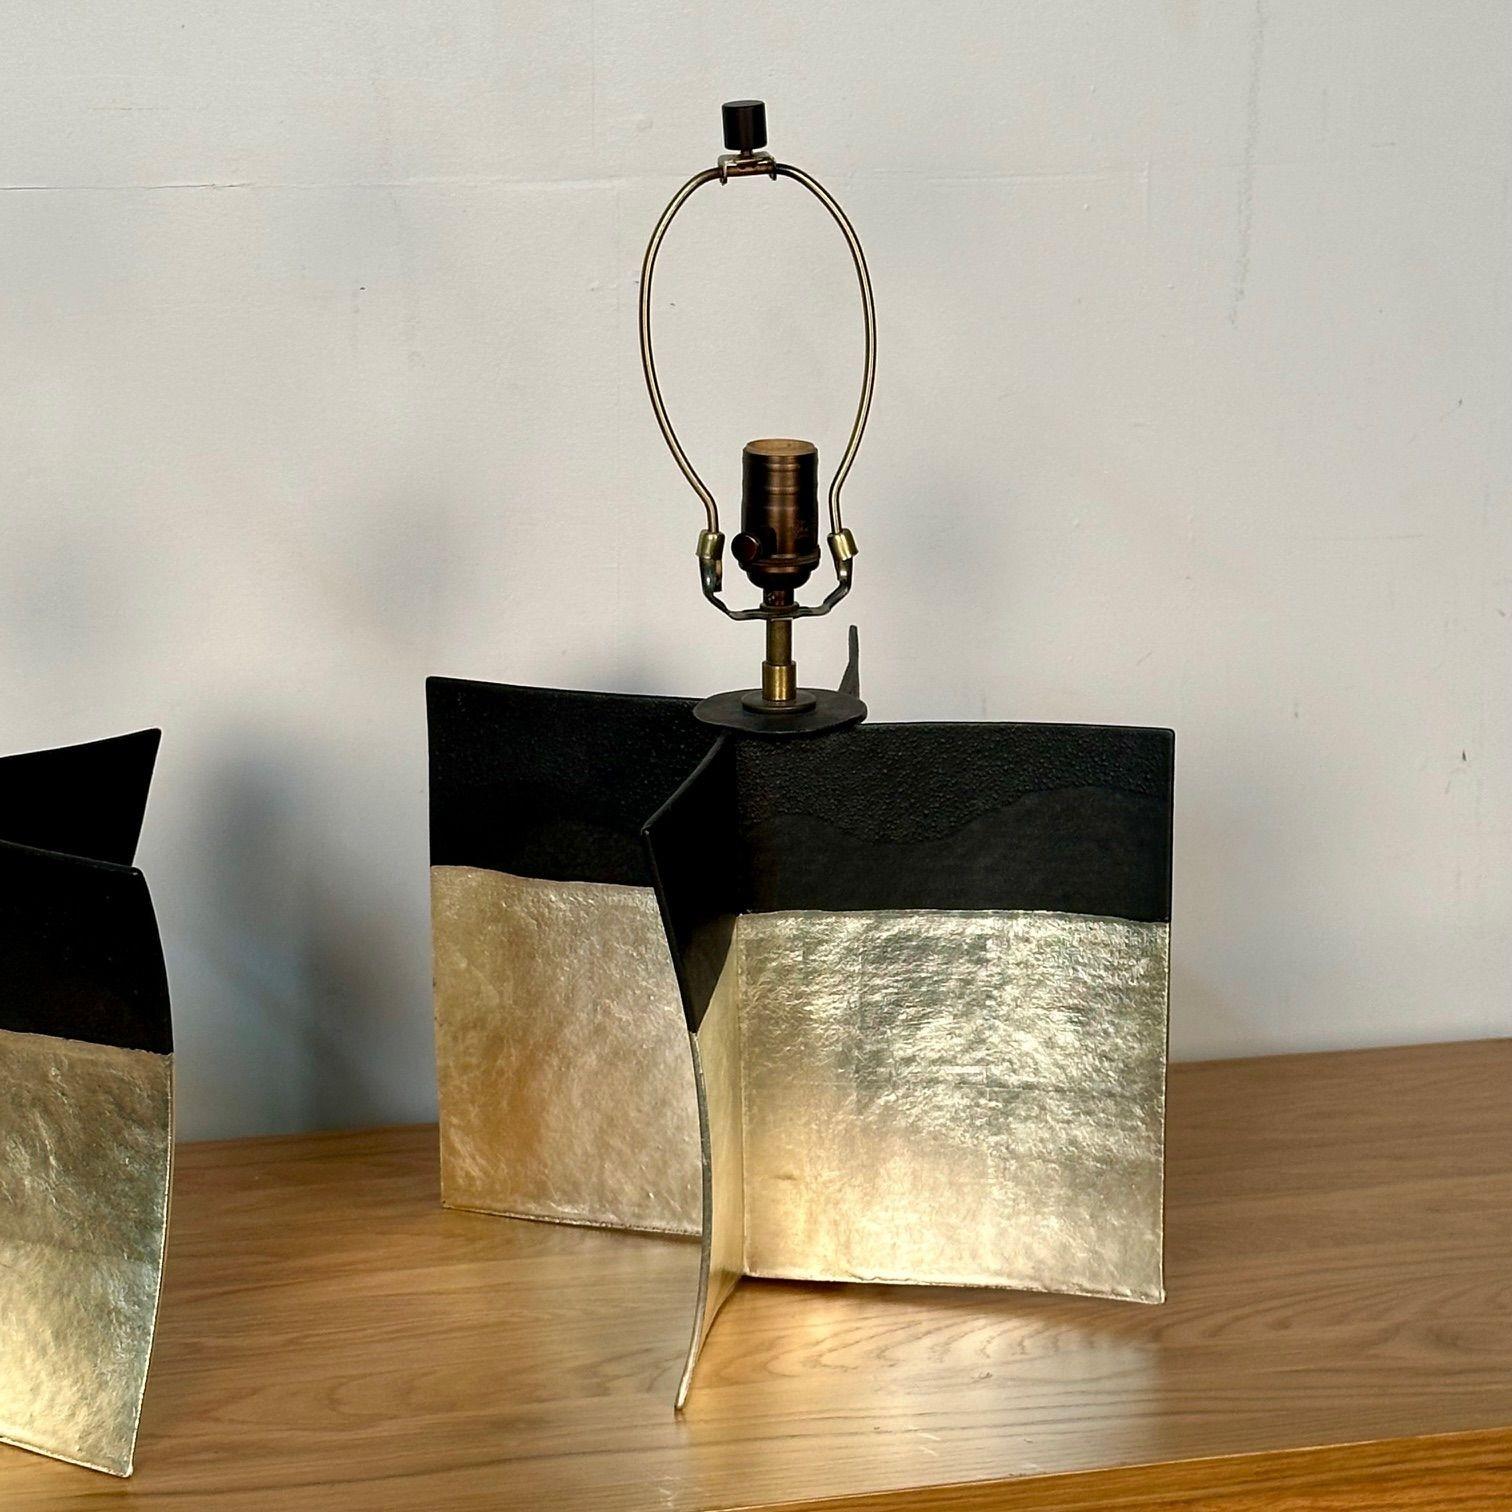 Dumais Made, Contemporary, Ceramic Croisillon Table Lamps, Gold Glaze, 2021 For Sale 5